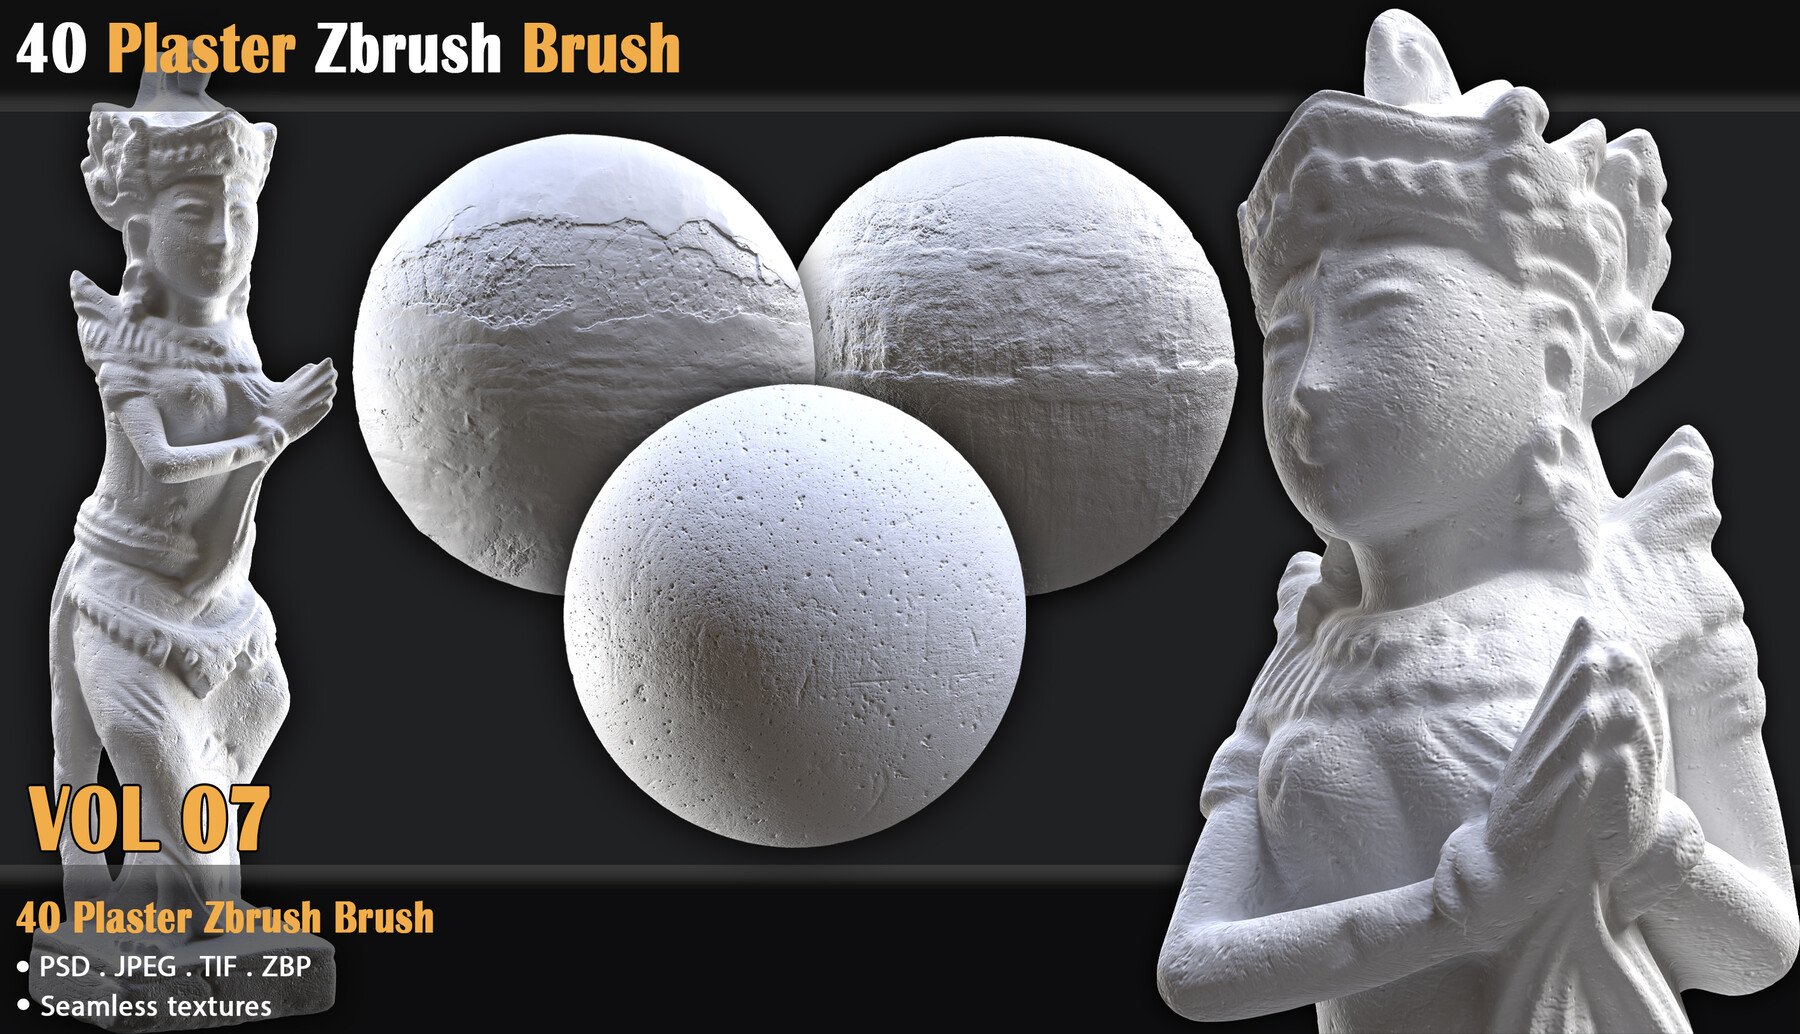 40 Plaster Zbrush Brush 